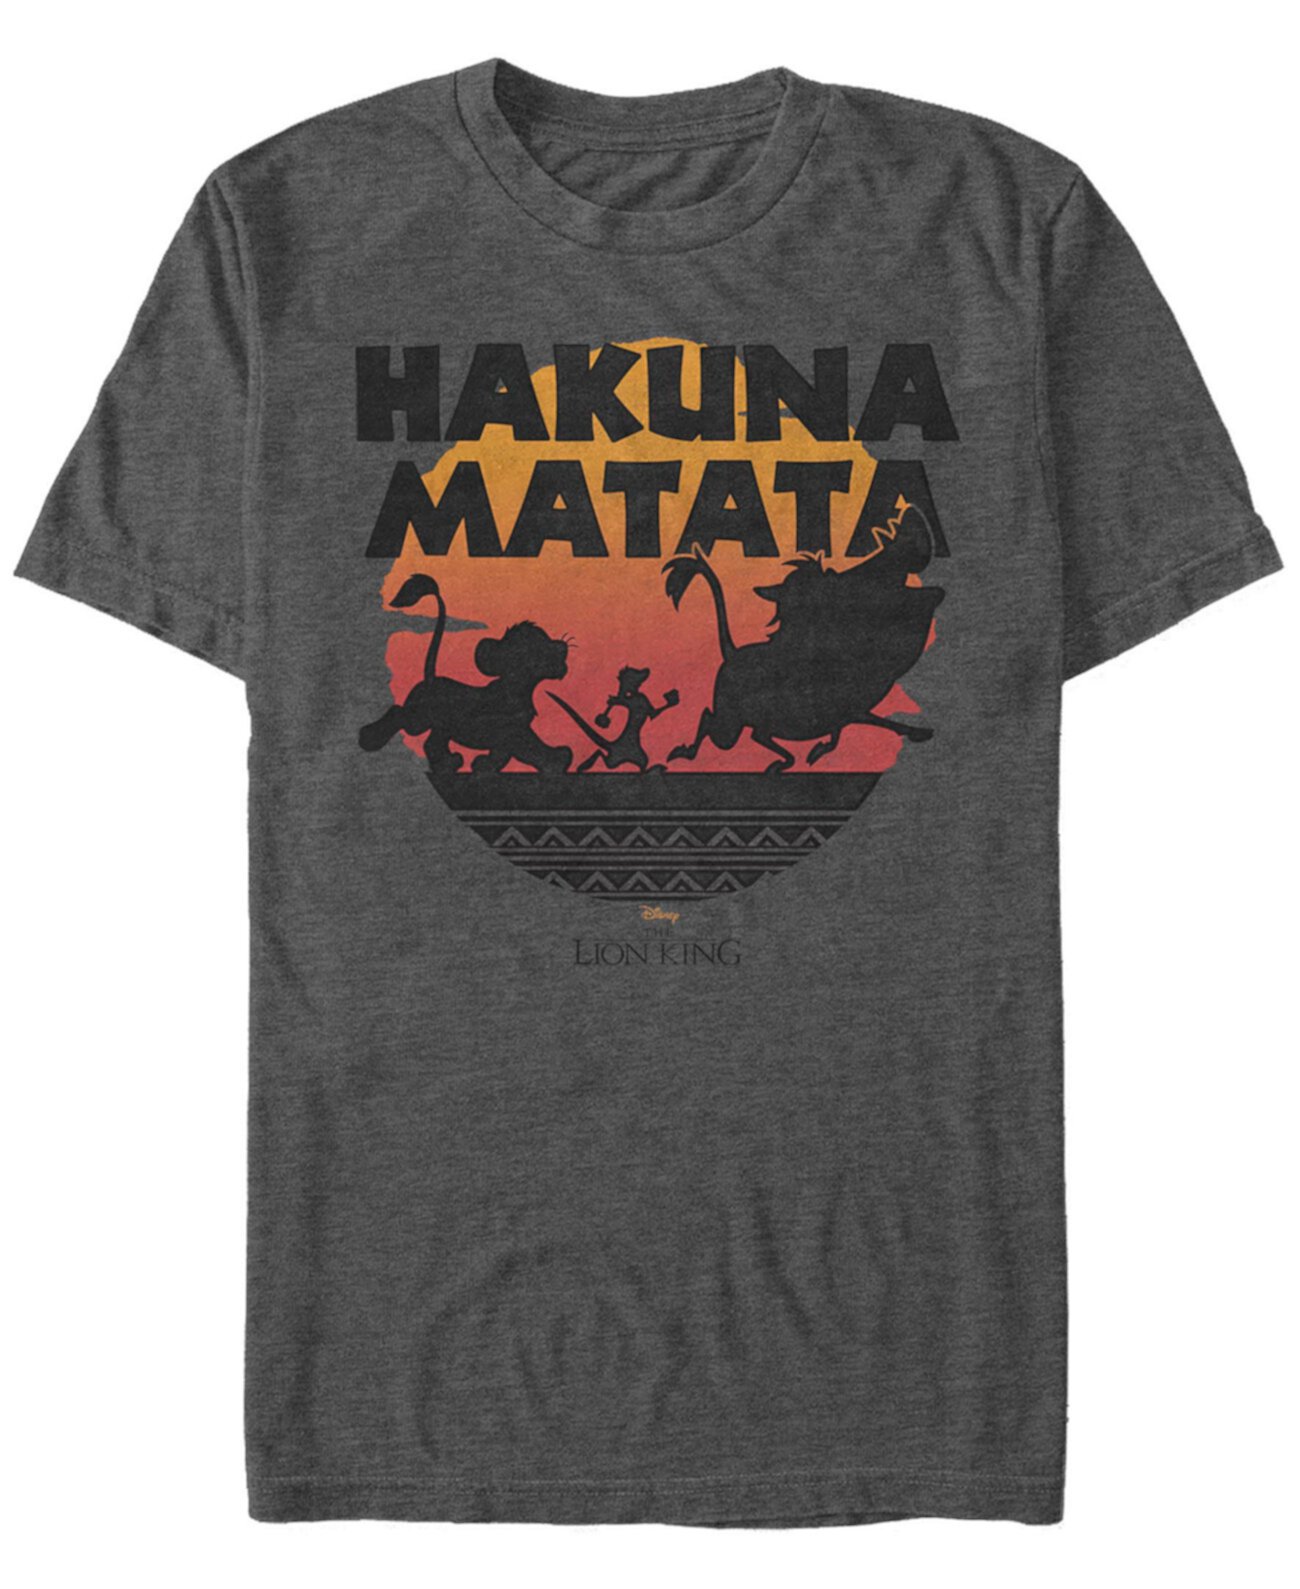 Мужская футболка Disney The Lion King Hakuna Matata с закатом и силуэтом с коротким рукавом FIFTH SUN